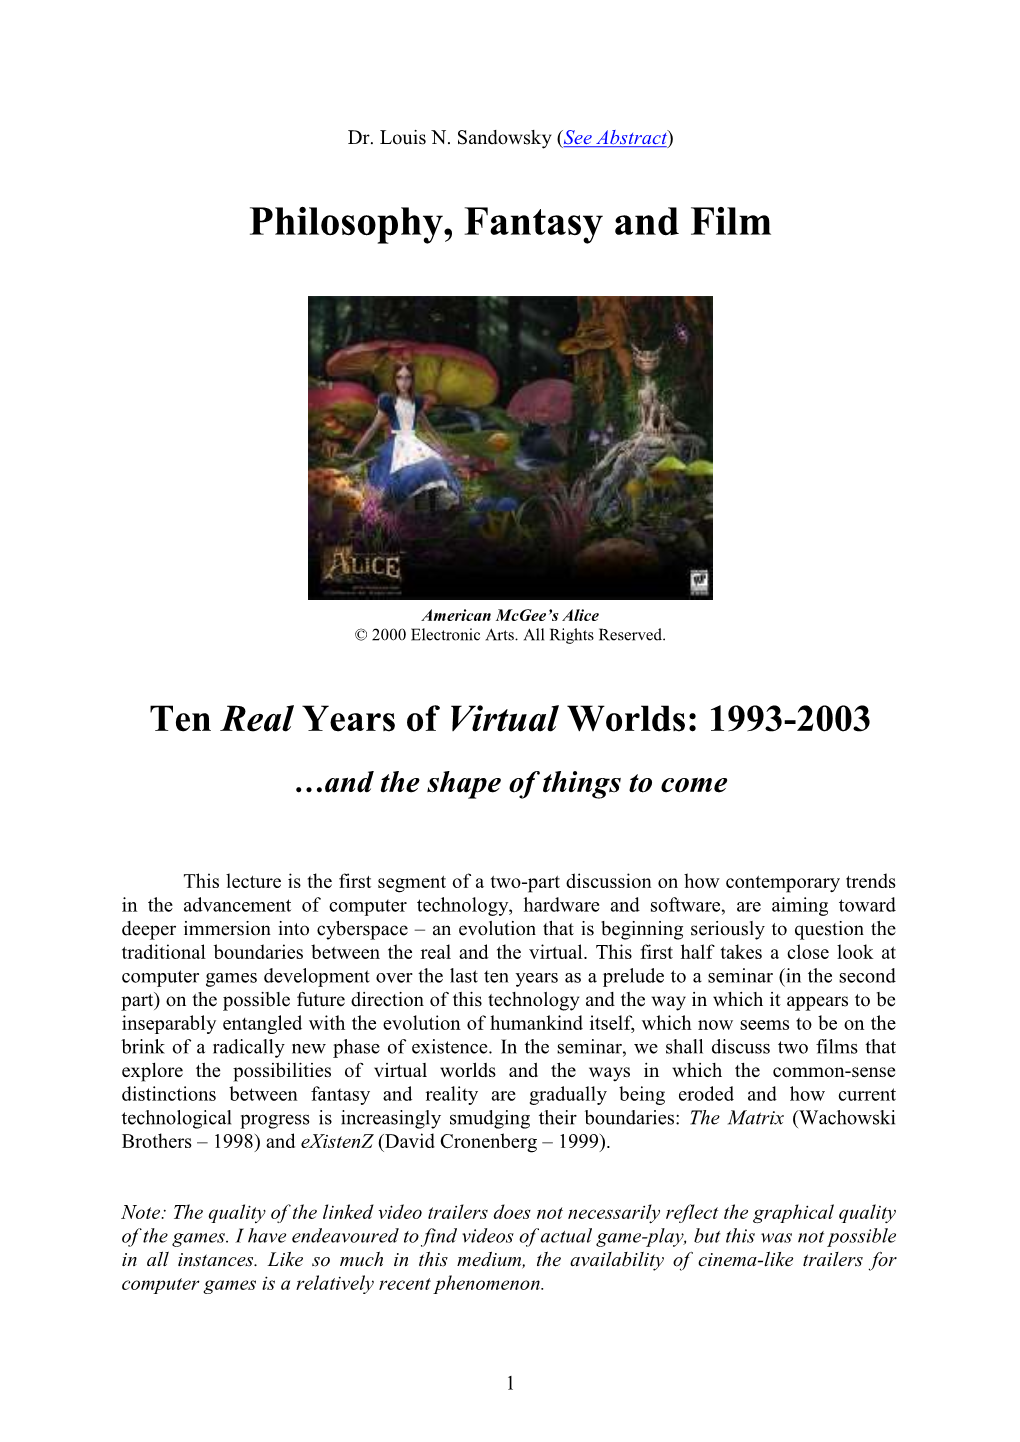 Philosophy, Fantasy and Film